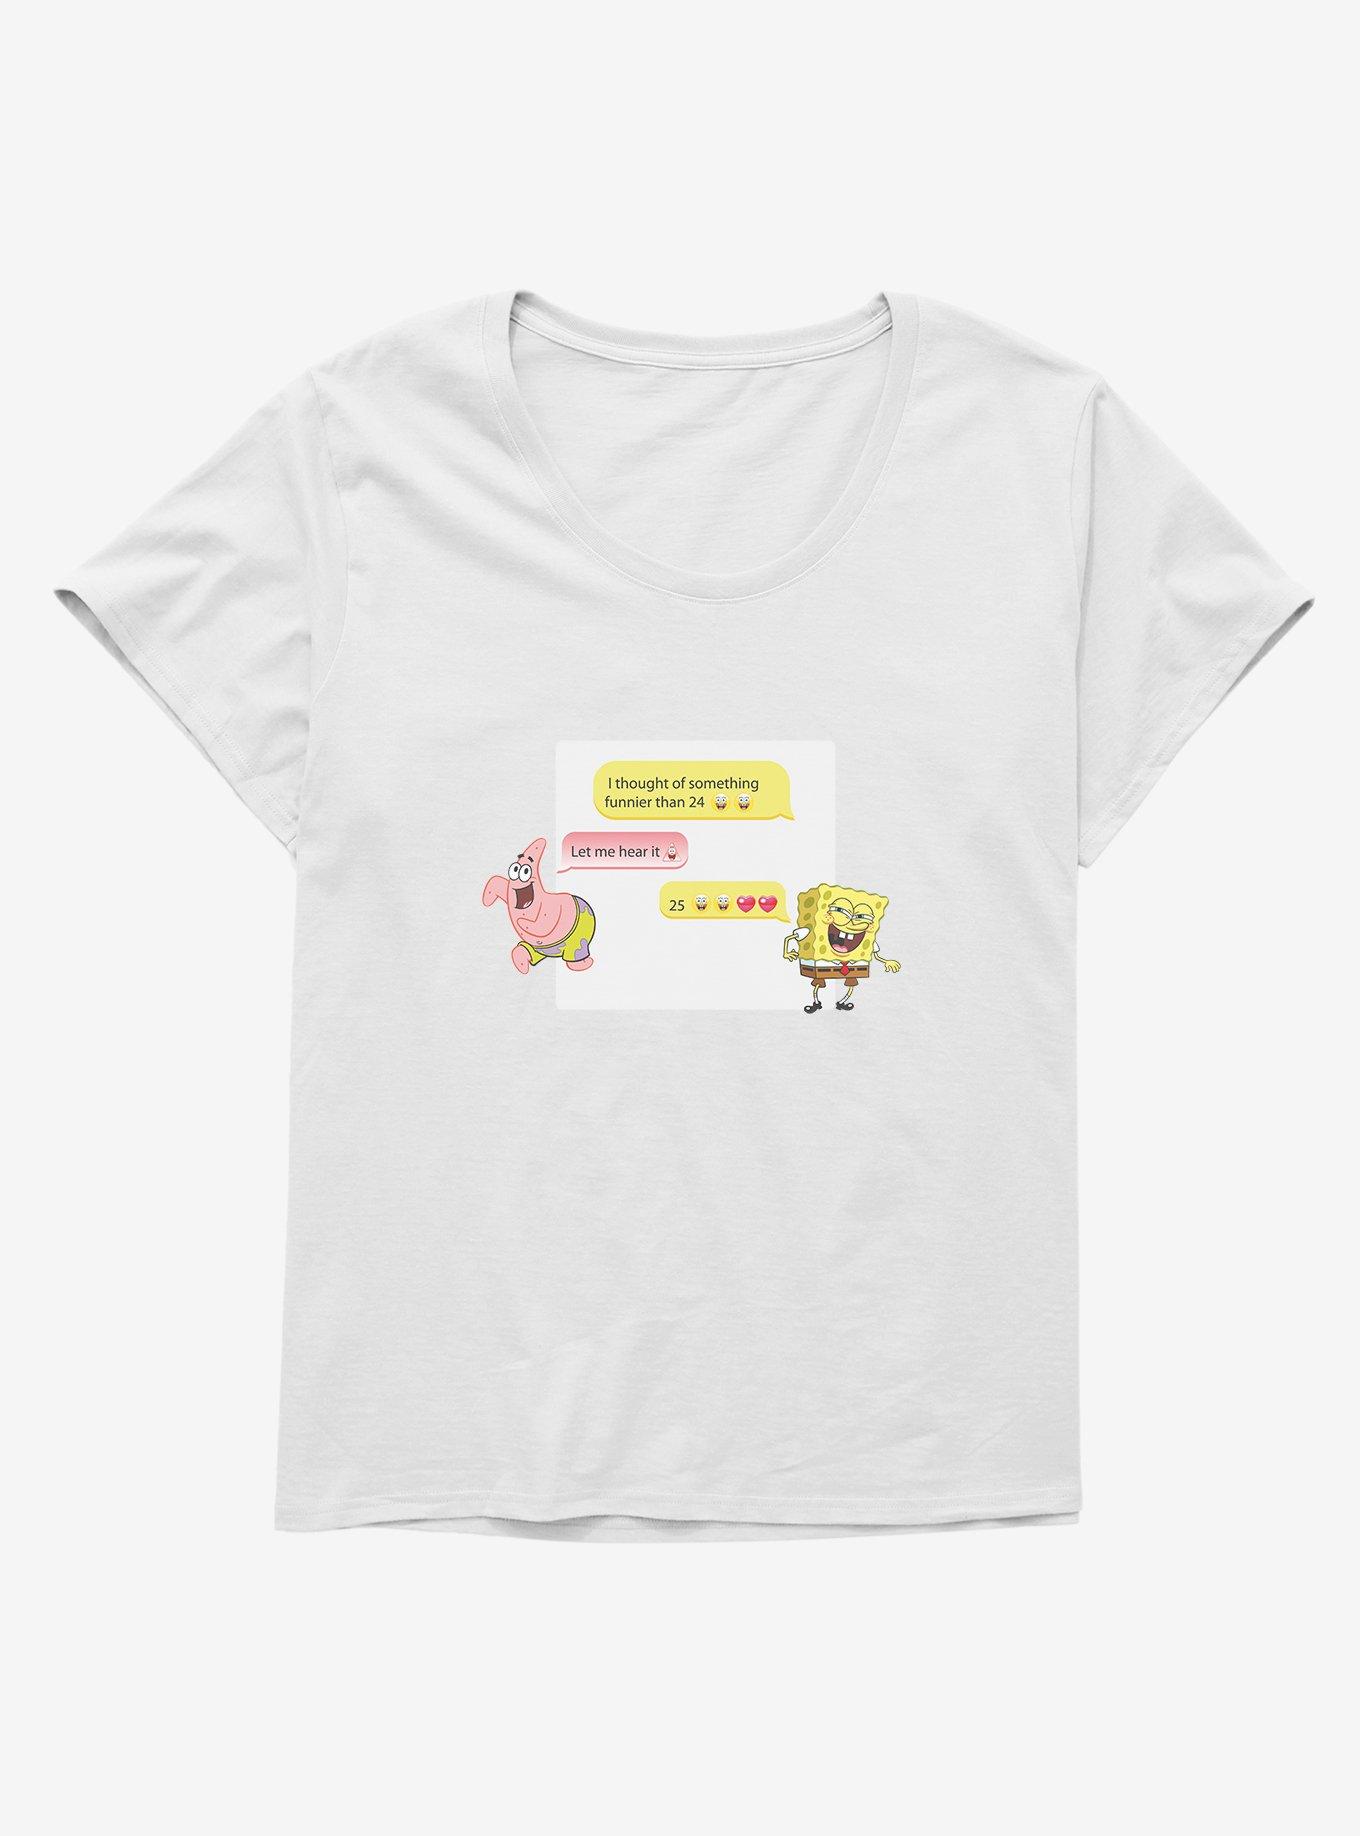 SpongeBob SquarePants Something Funnier Than 24 Girls T-Shirt Plus Size, , hi-res